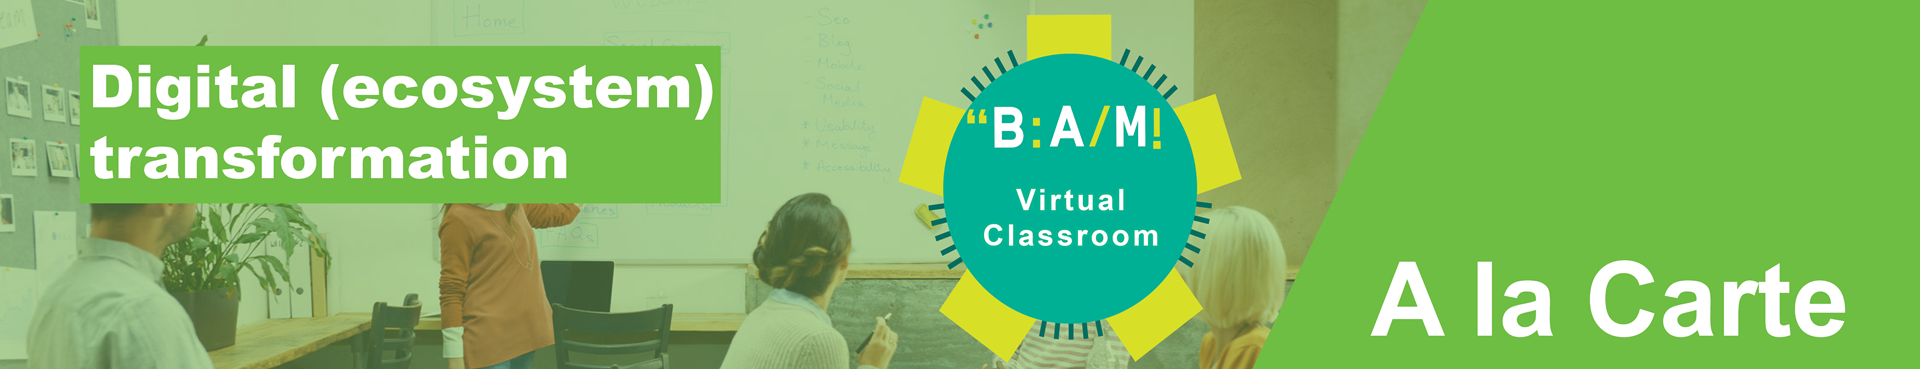 Digital ecosystem transformation_virtual classroom